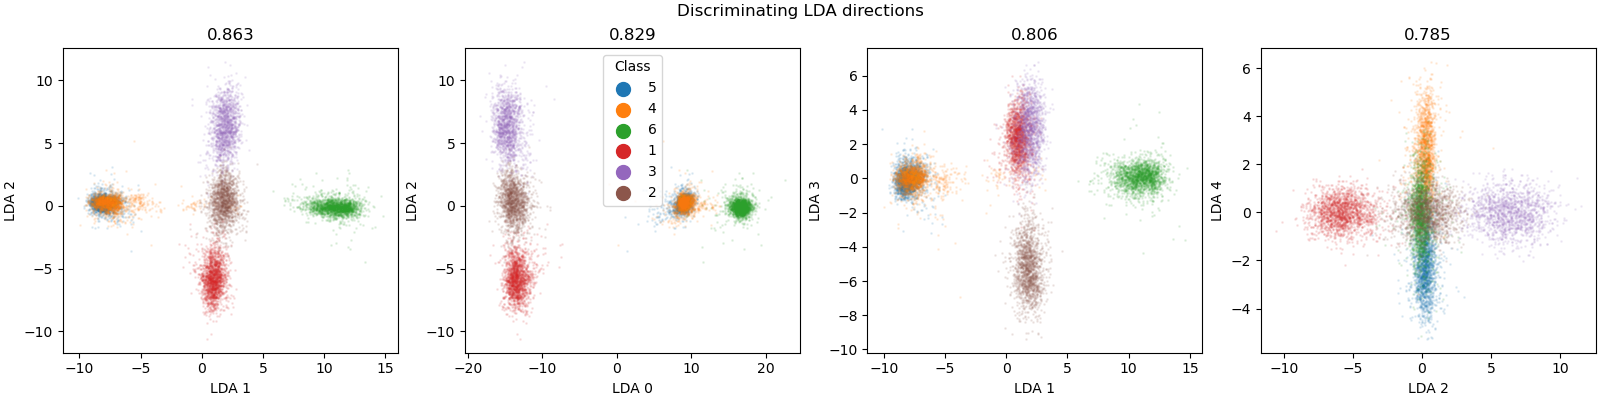 Discriminating LDA directions, 0.863, 0.829, 0.806, 0.785